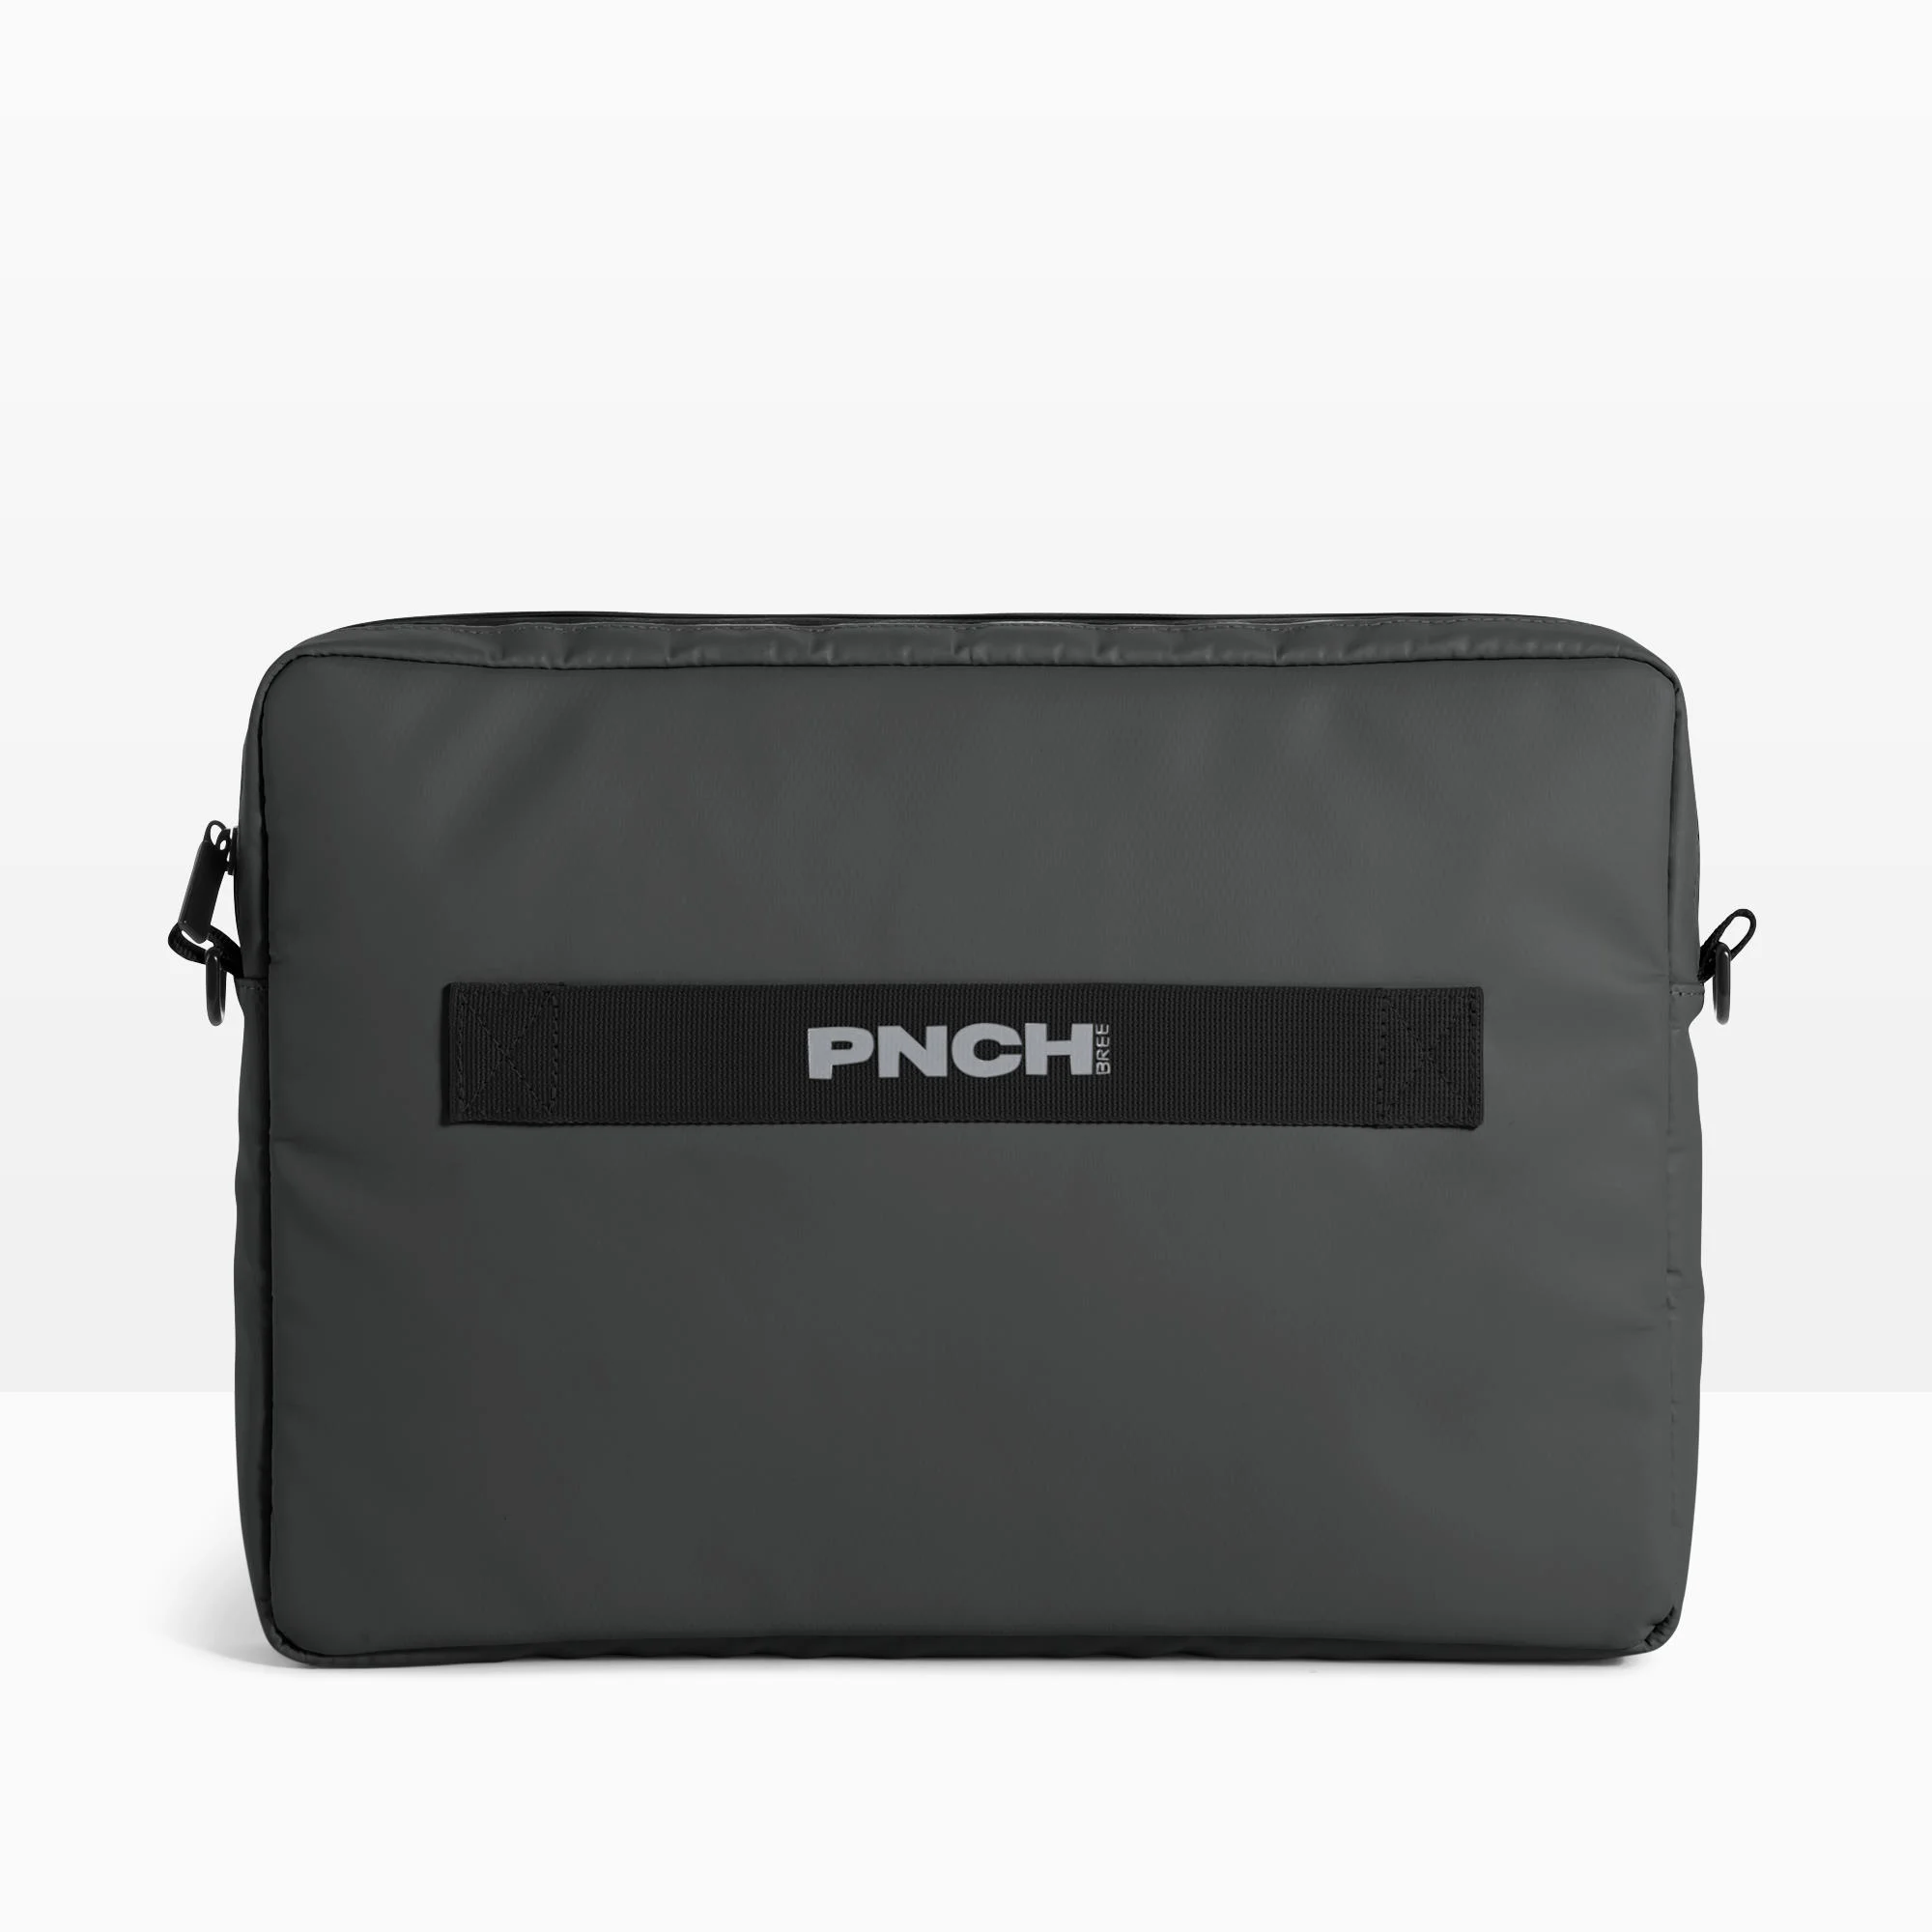 BREE PNCH 793 - black - Laptoptasche